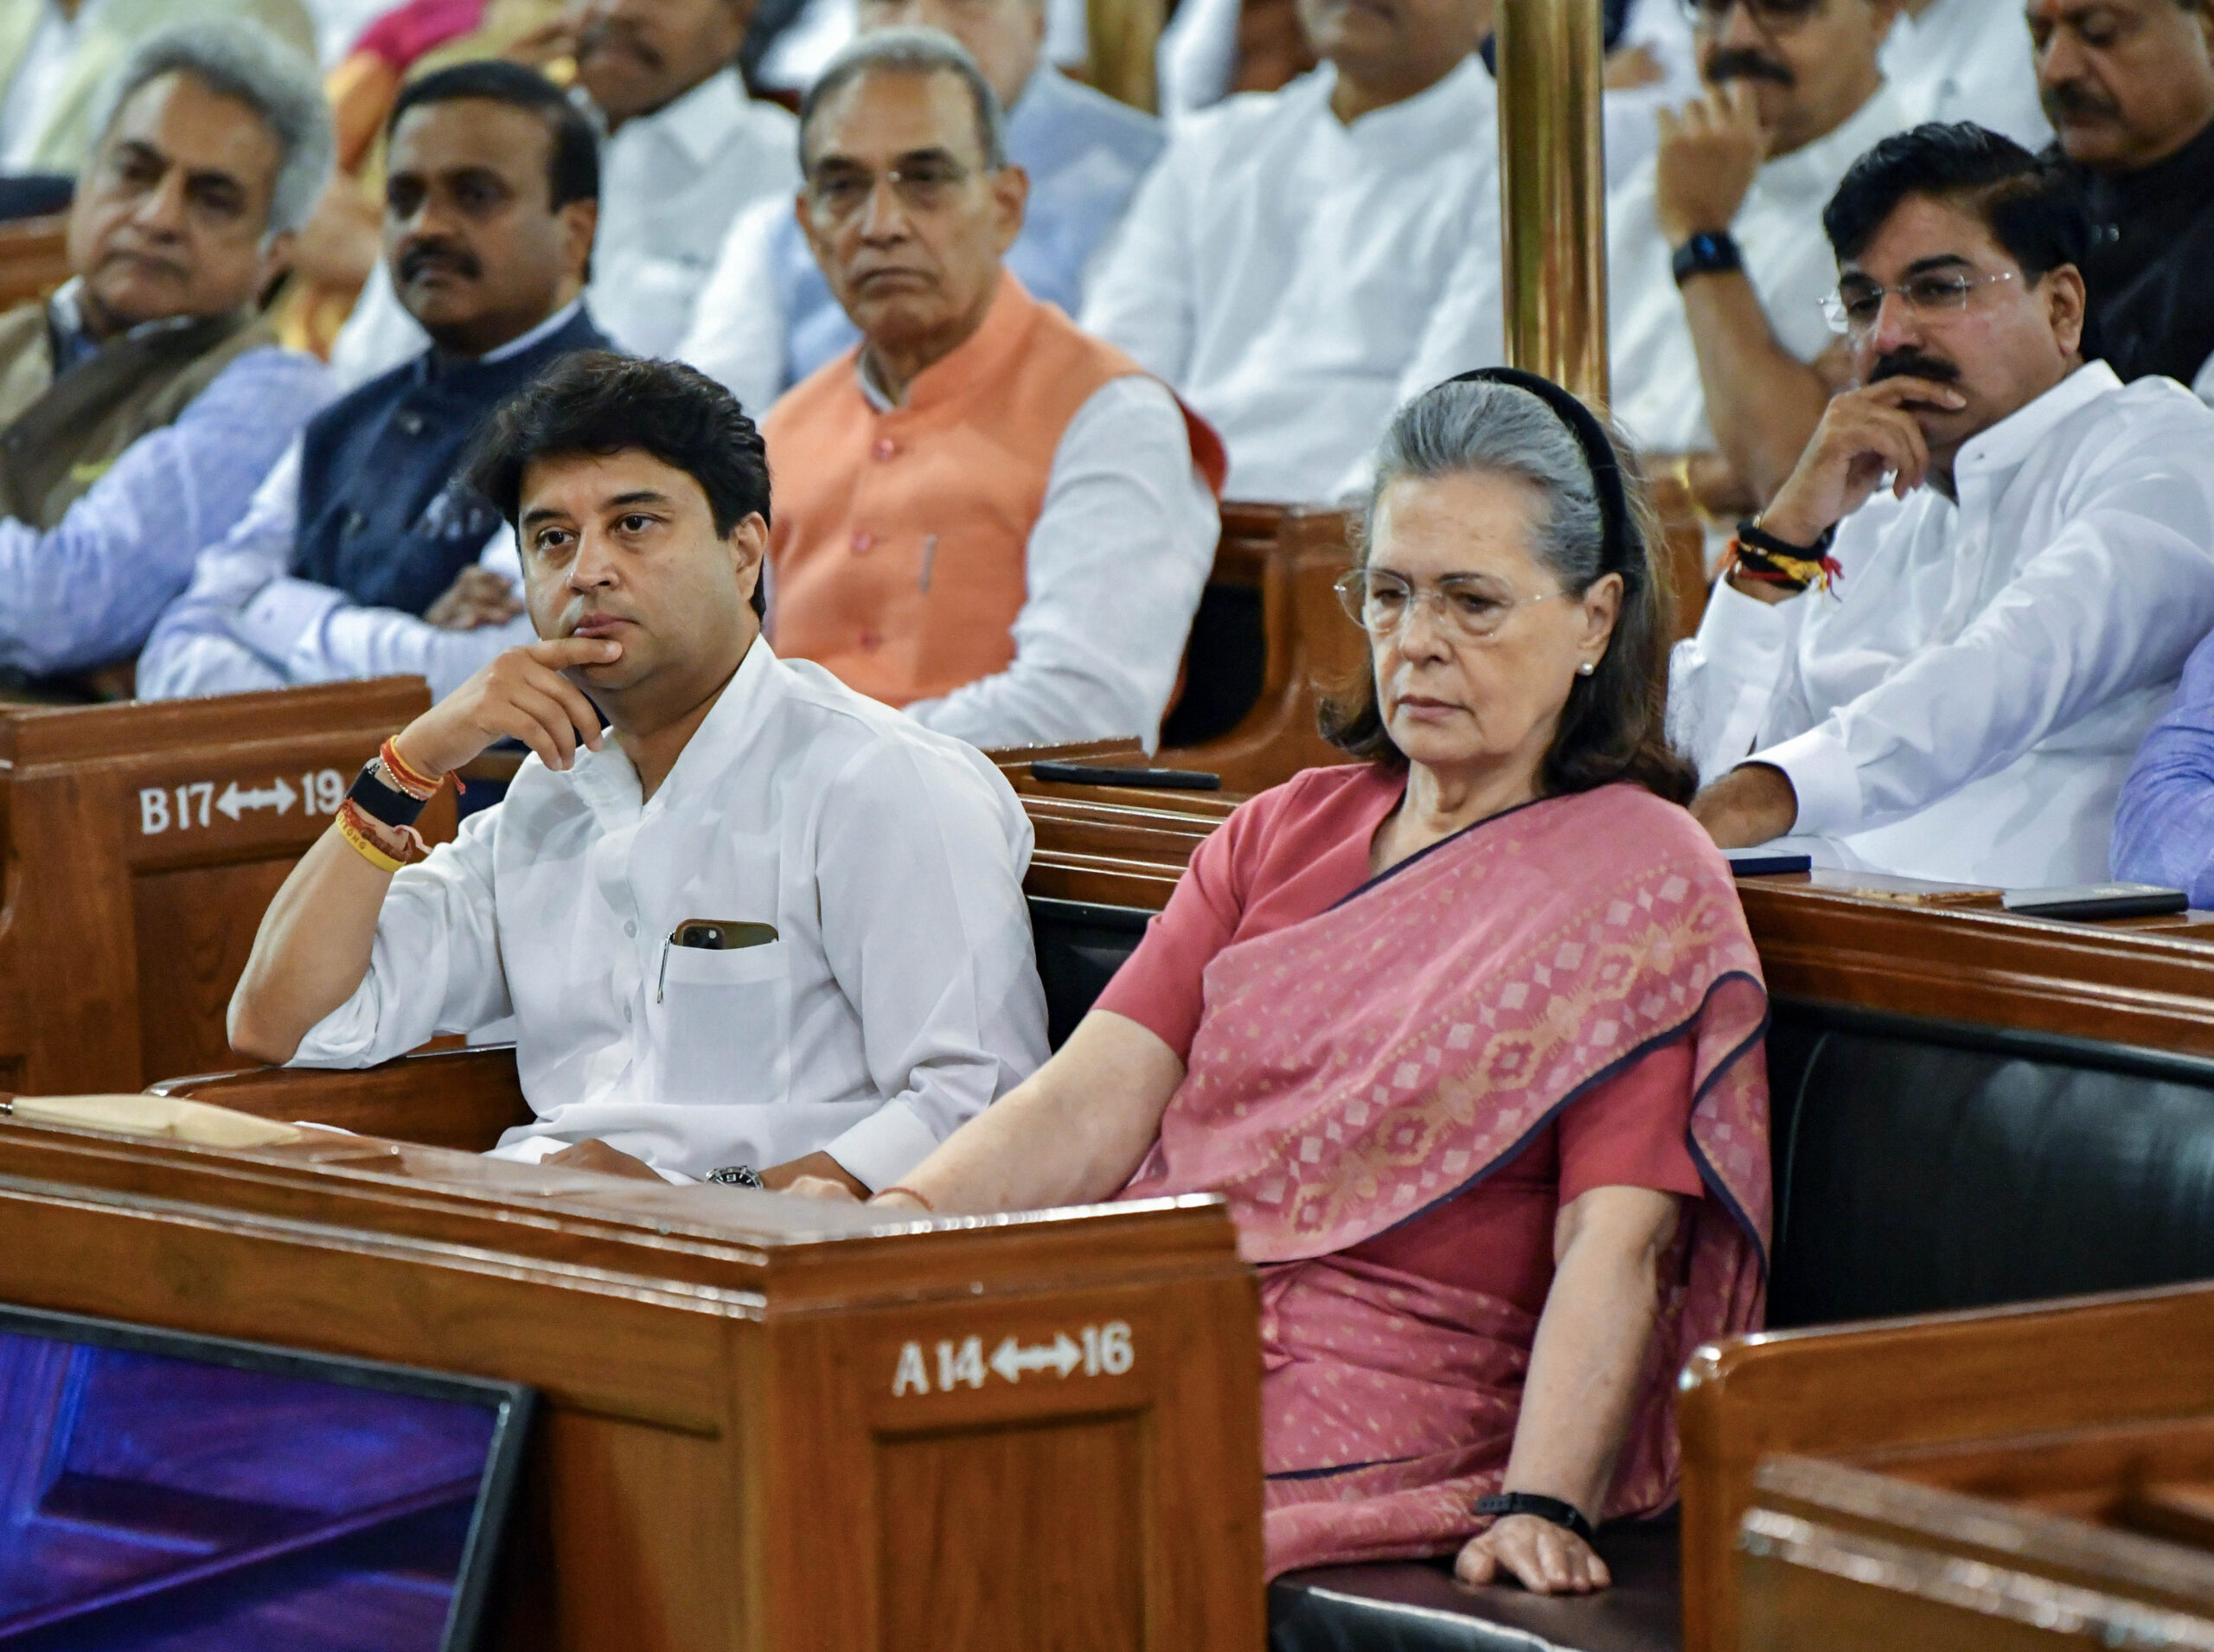 Parliament Special Session: It was Rajiv Gandhi’s dream Bill, says Sonia Gandhi